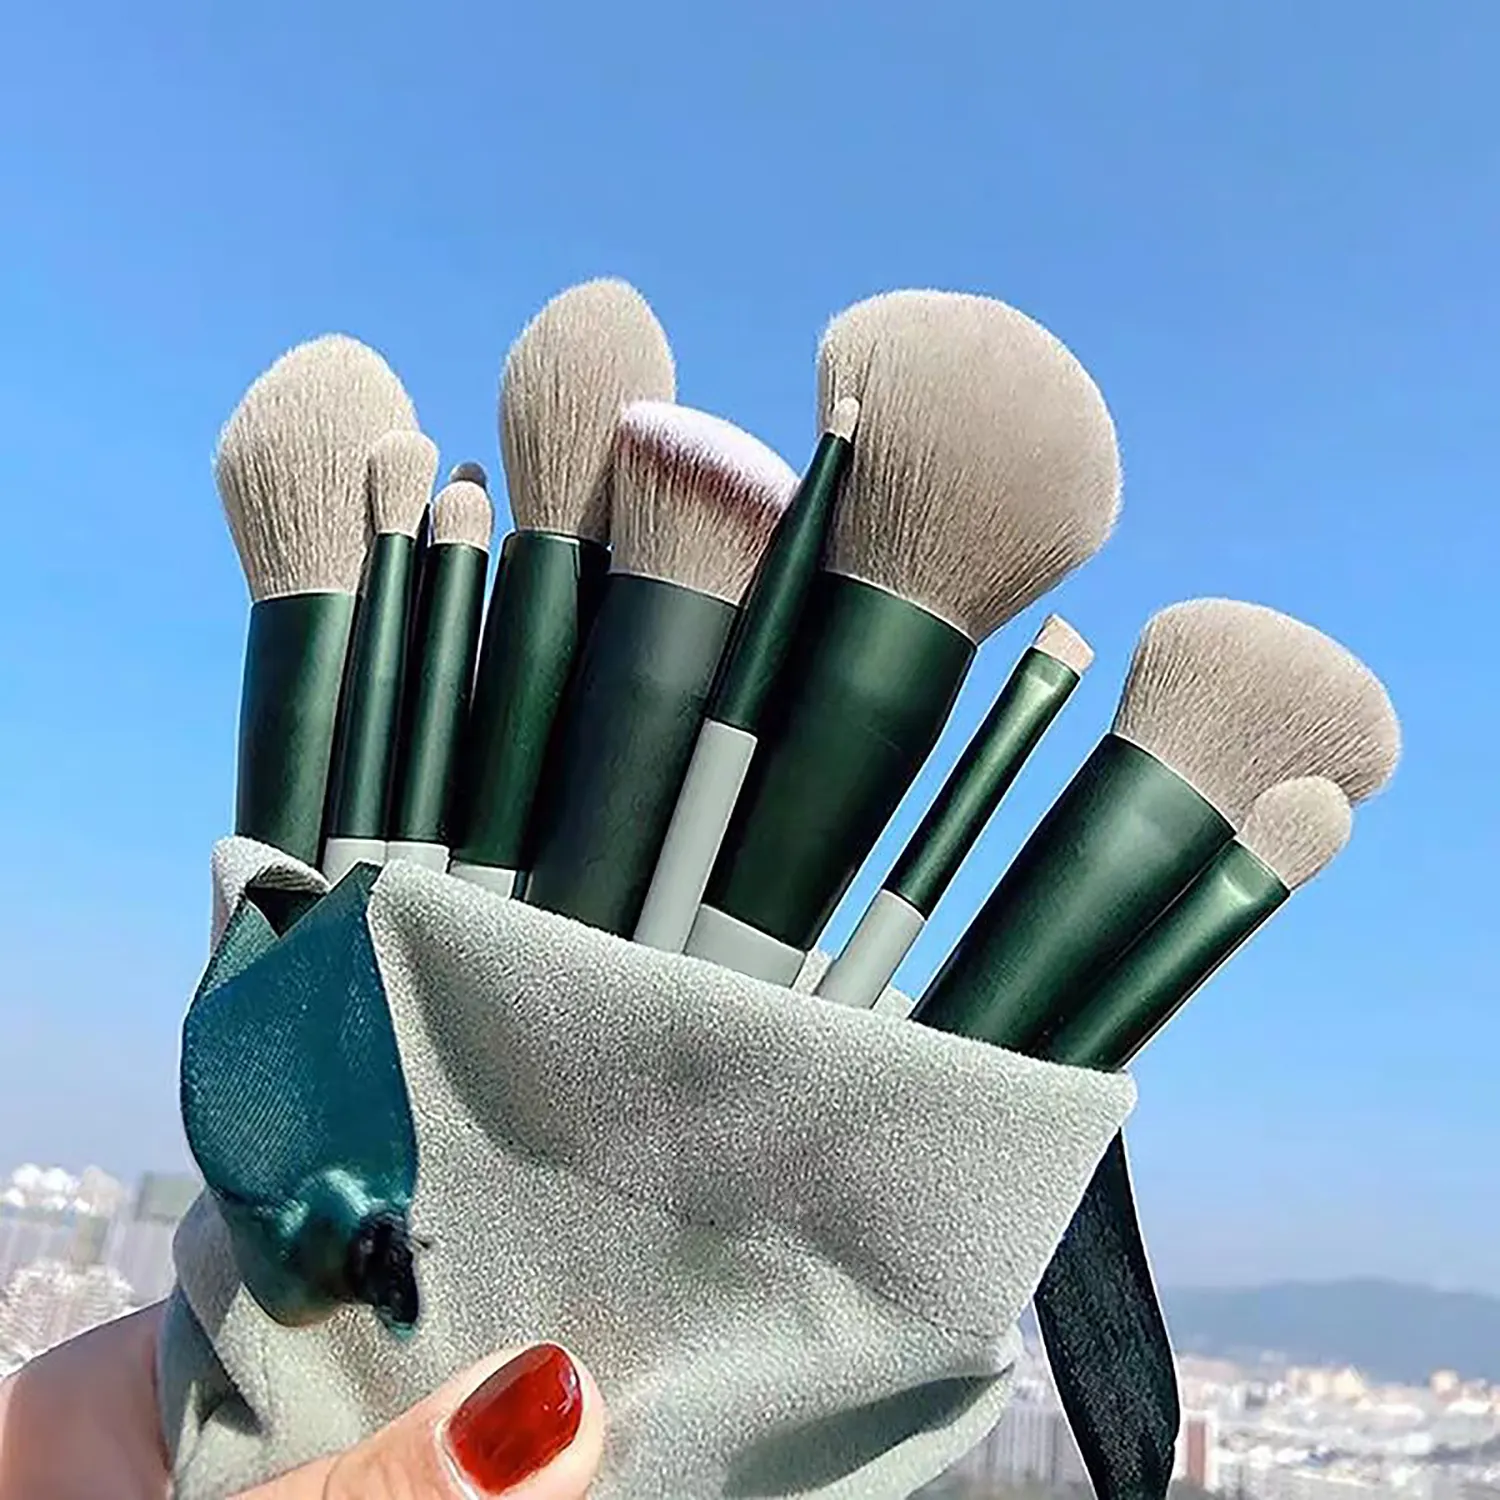 BUEART New Arrival Portable Makeup Brush Set Quick-drying Bristles Synthetic Fiber 13PCS